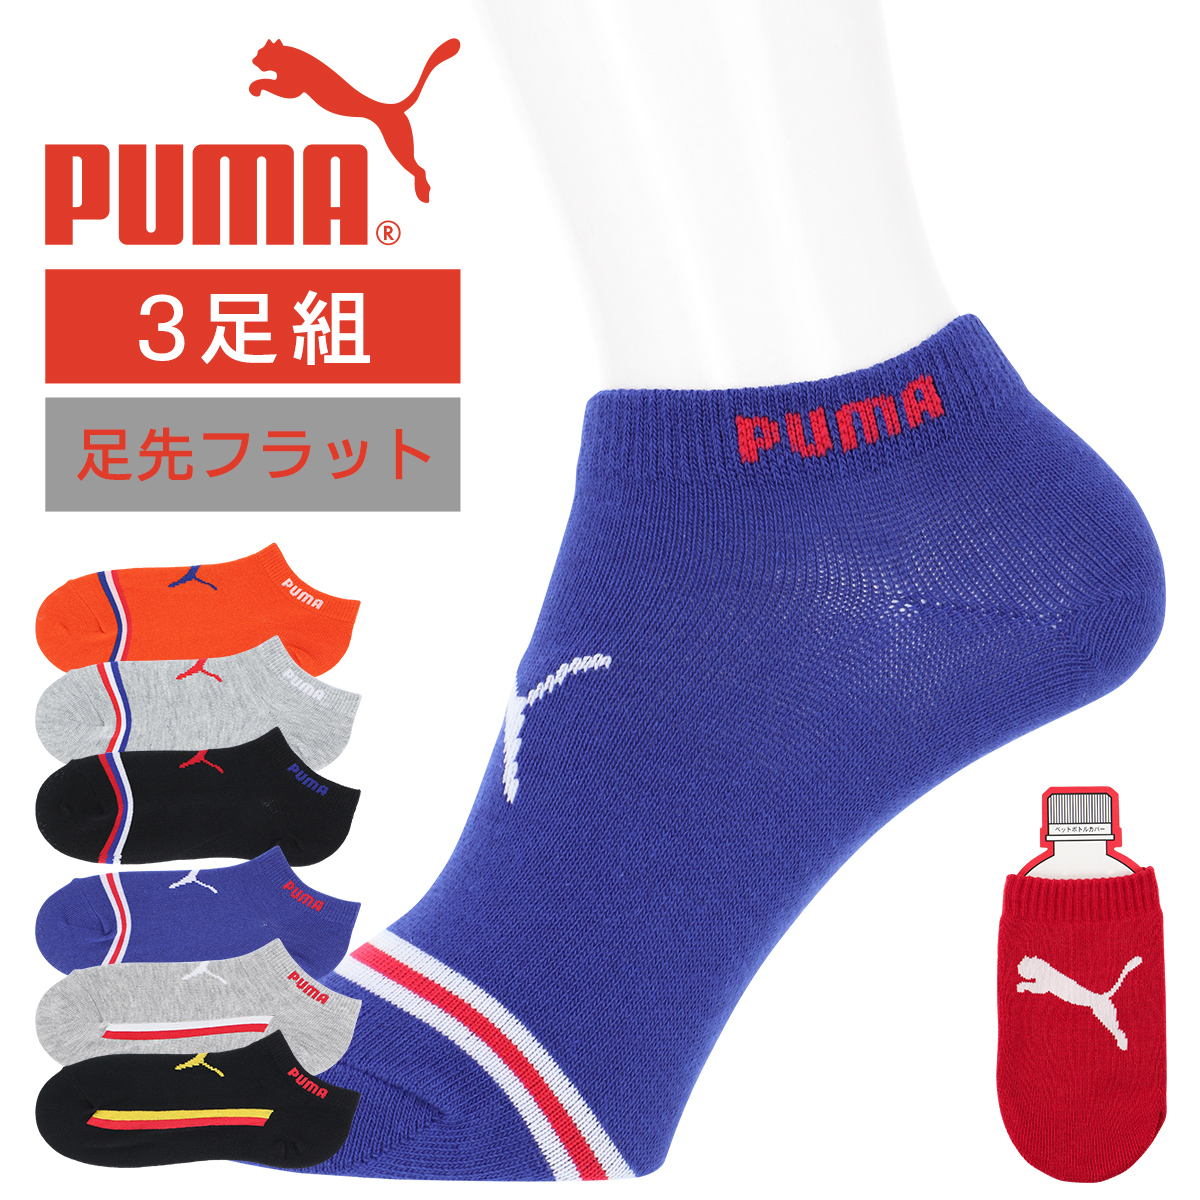 puma socks sale